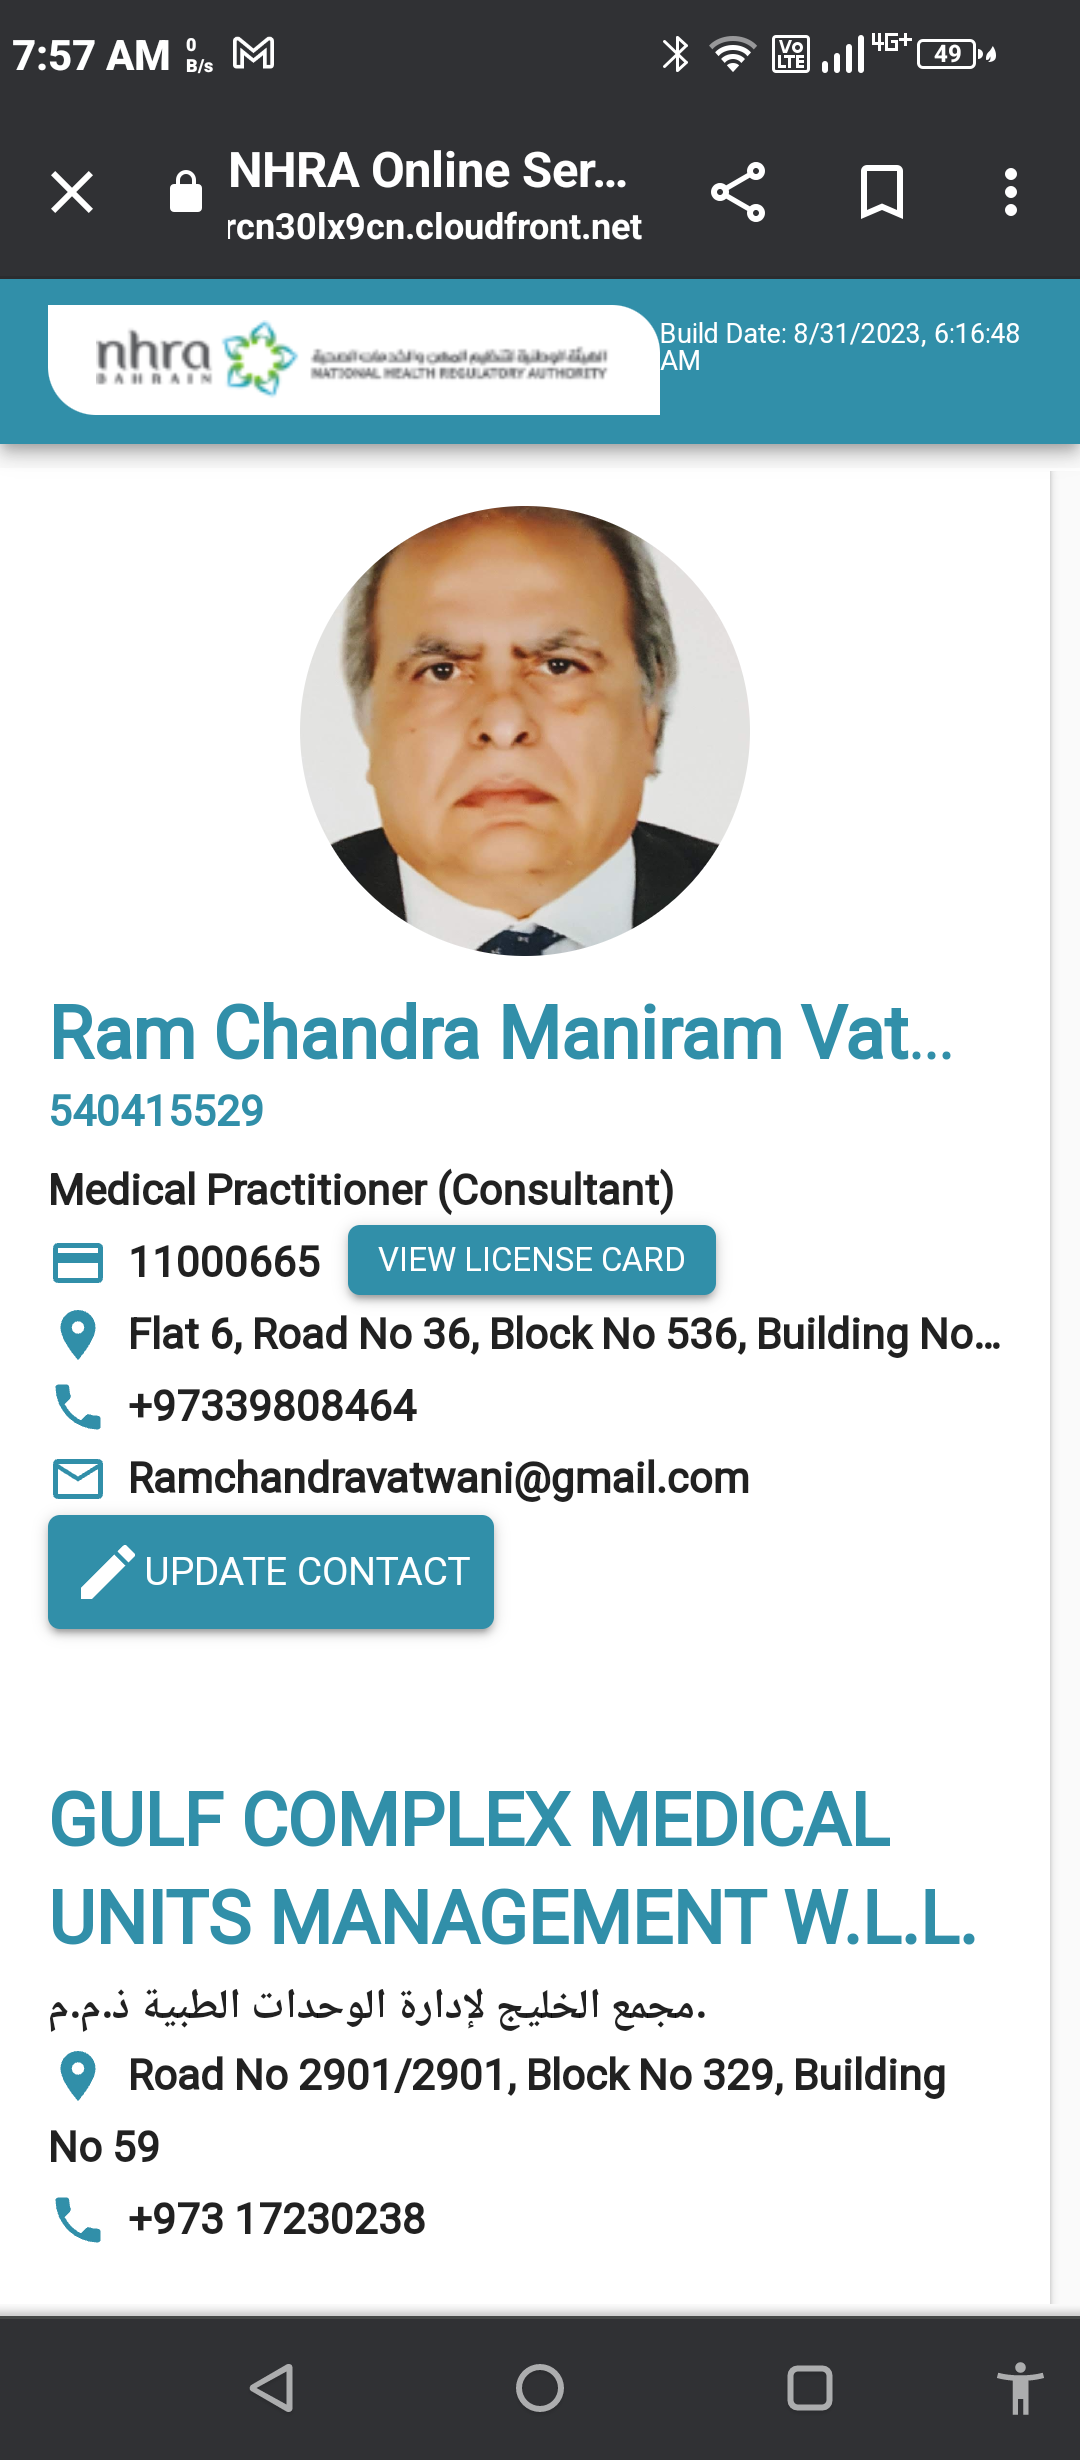 YEA EY! X= @.al* ED.

X @ NHRA Online Ser... o&lt;° 0

rcn30Ix9cn.cloudfront.net

Build Date: 8/31/2023, 6:16:48
AM

 

Ram Chandra Maniram Vat...
540415529

Medical Practitioner (Consultant)

© Flat 6, Road No 36, Block No 536, Building No...
t. +97339808464
MM Ramchandravatwani@gmail.com

V4 UPDATE CONTACT

GULF COMPLEX MEDICAL
UNITS MANAGEMENT W.L.L.

ppd dual Olas oll 33153 dsl gasna.
© Road No 2901/2901, Block No 329, Building
No 59

t. +97317230238

NY